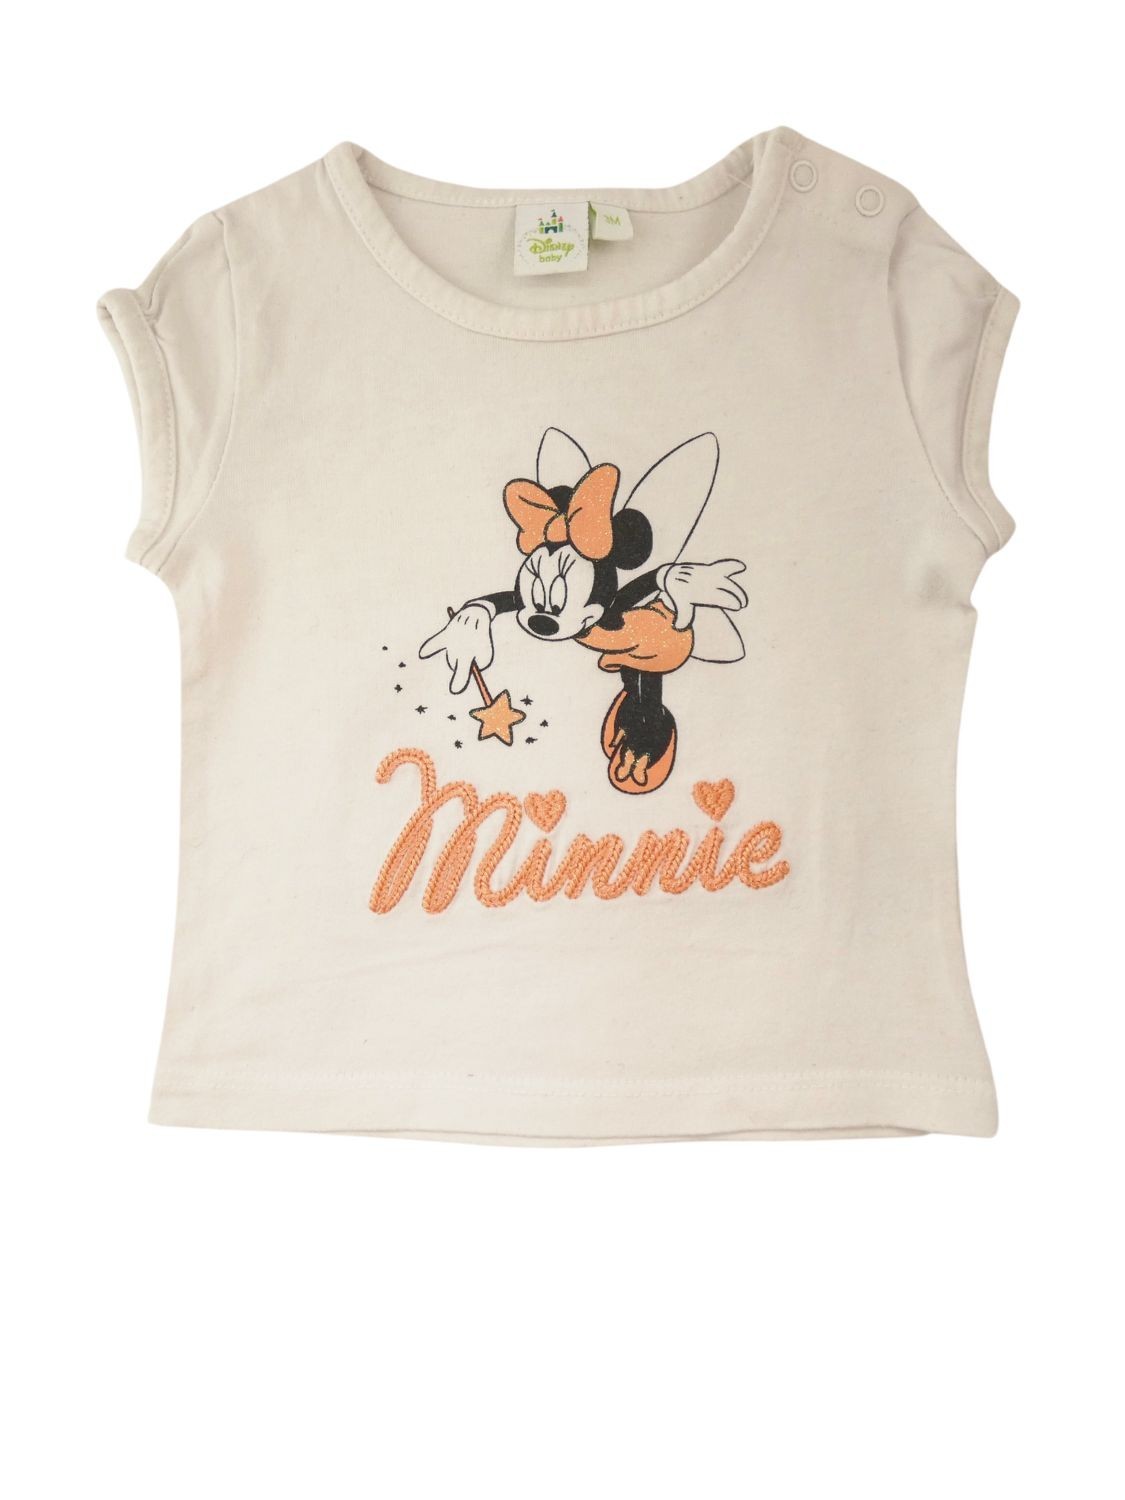 T-shirt MC Minnie fée DISNEY taille 3 mois